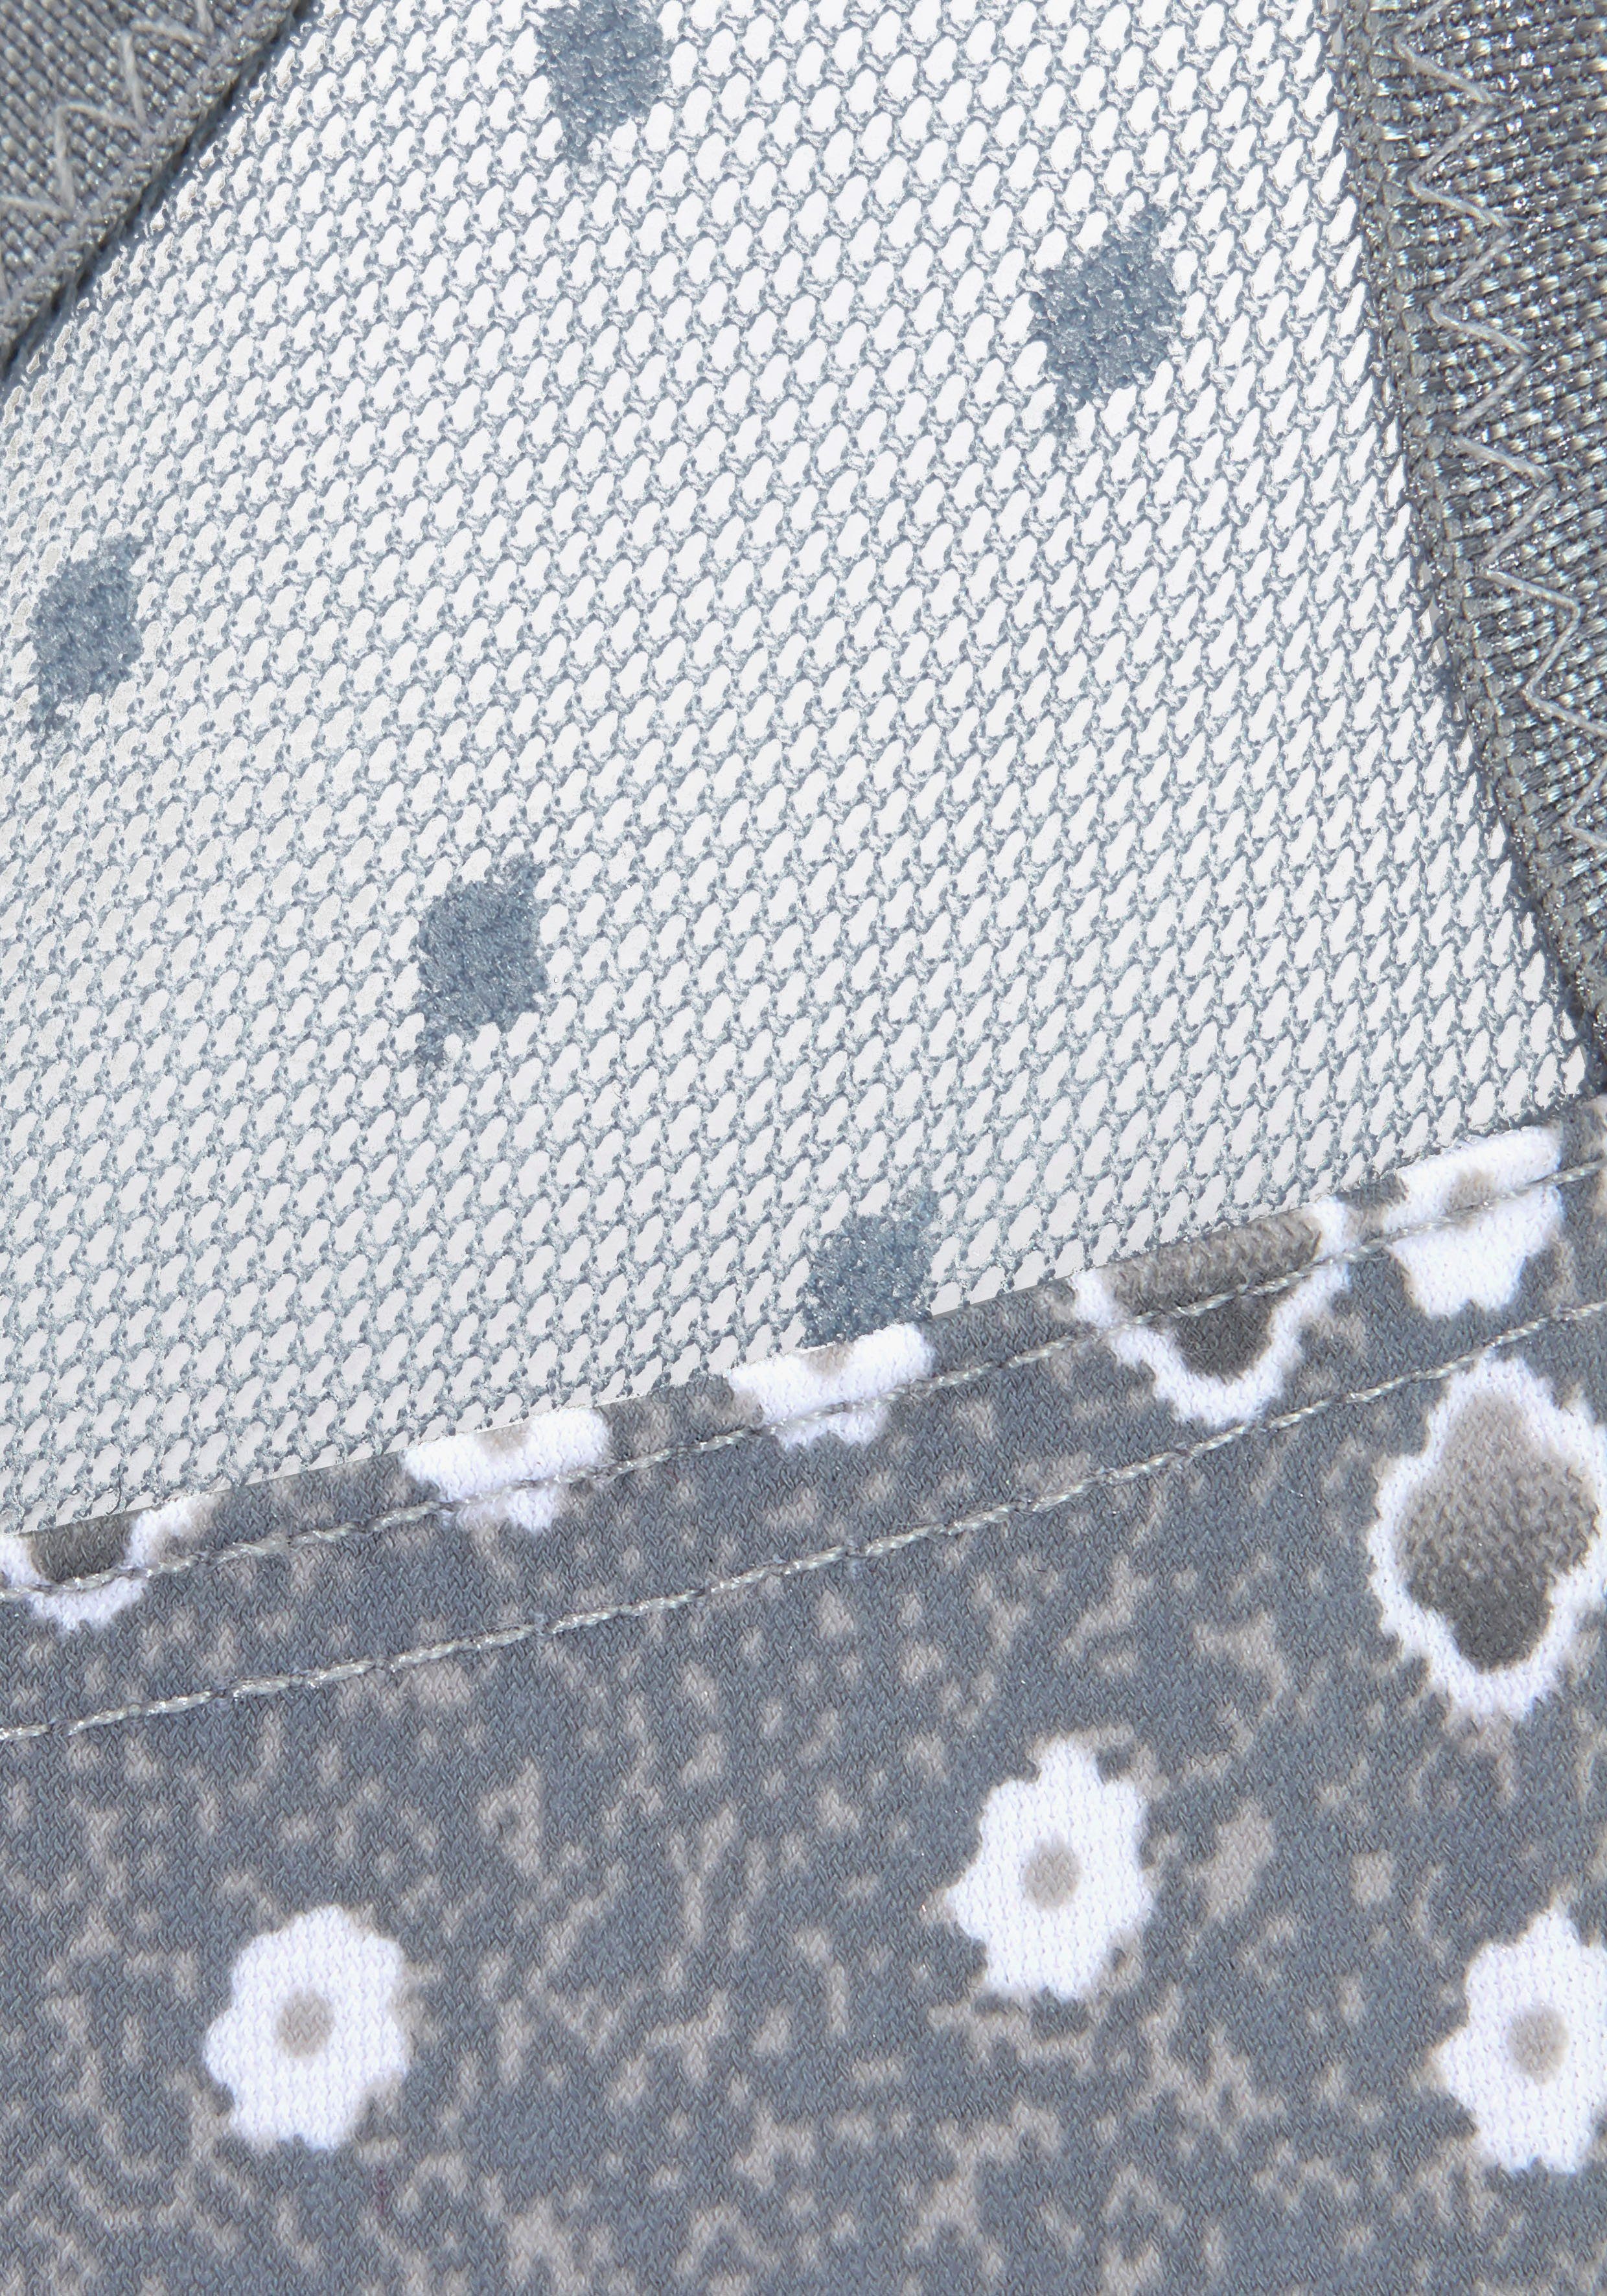 transparentem im Tüll Bügel grau-bedruckt Minimizer-BH Obercup, leicht mit Dessous Basic und Nuance